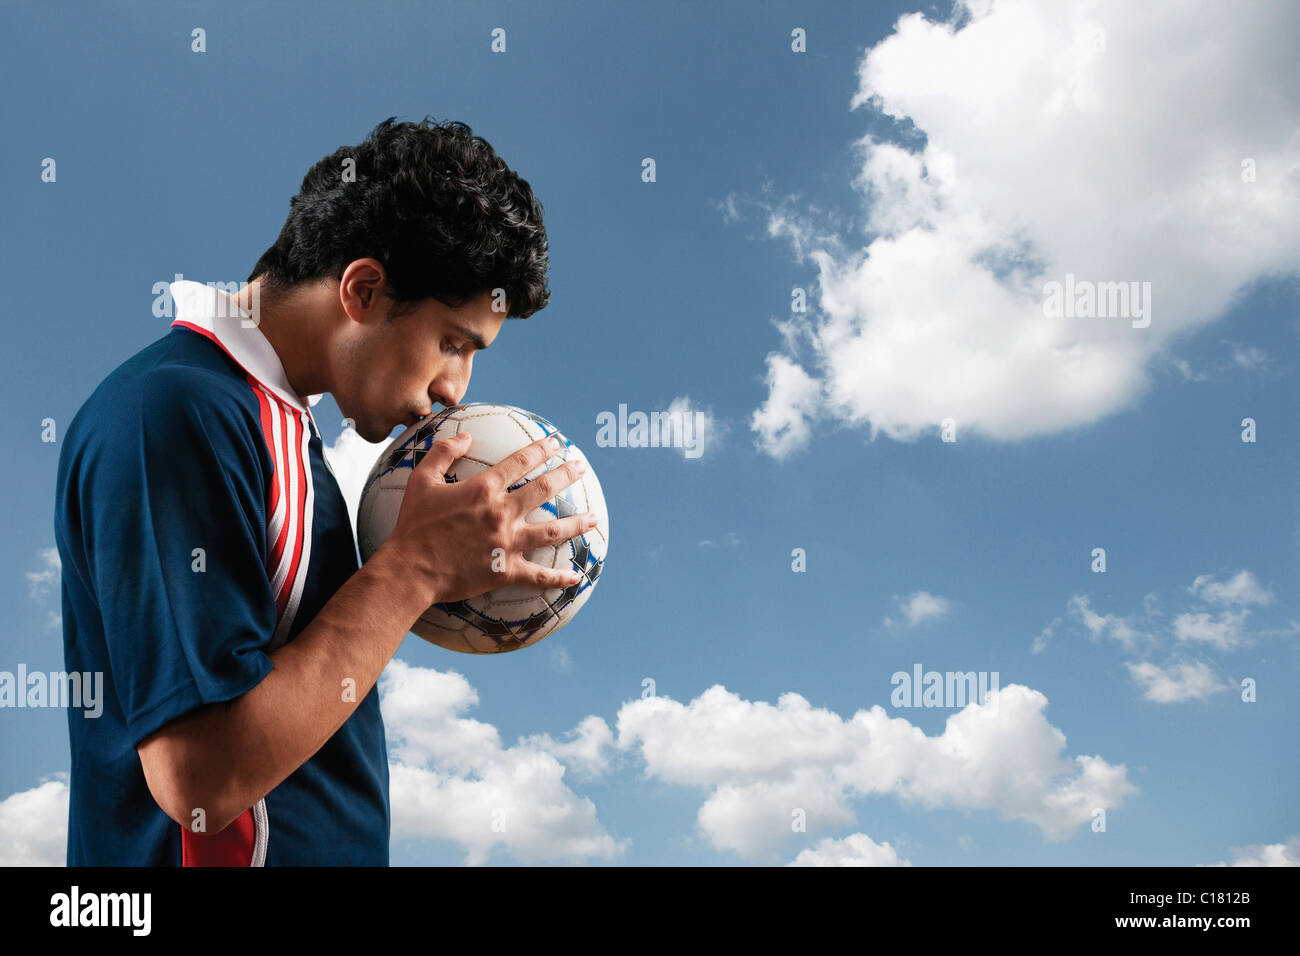 Soccer player kissing a soccer ball Stock Photo